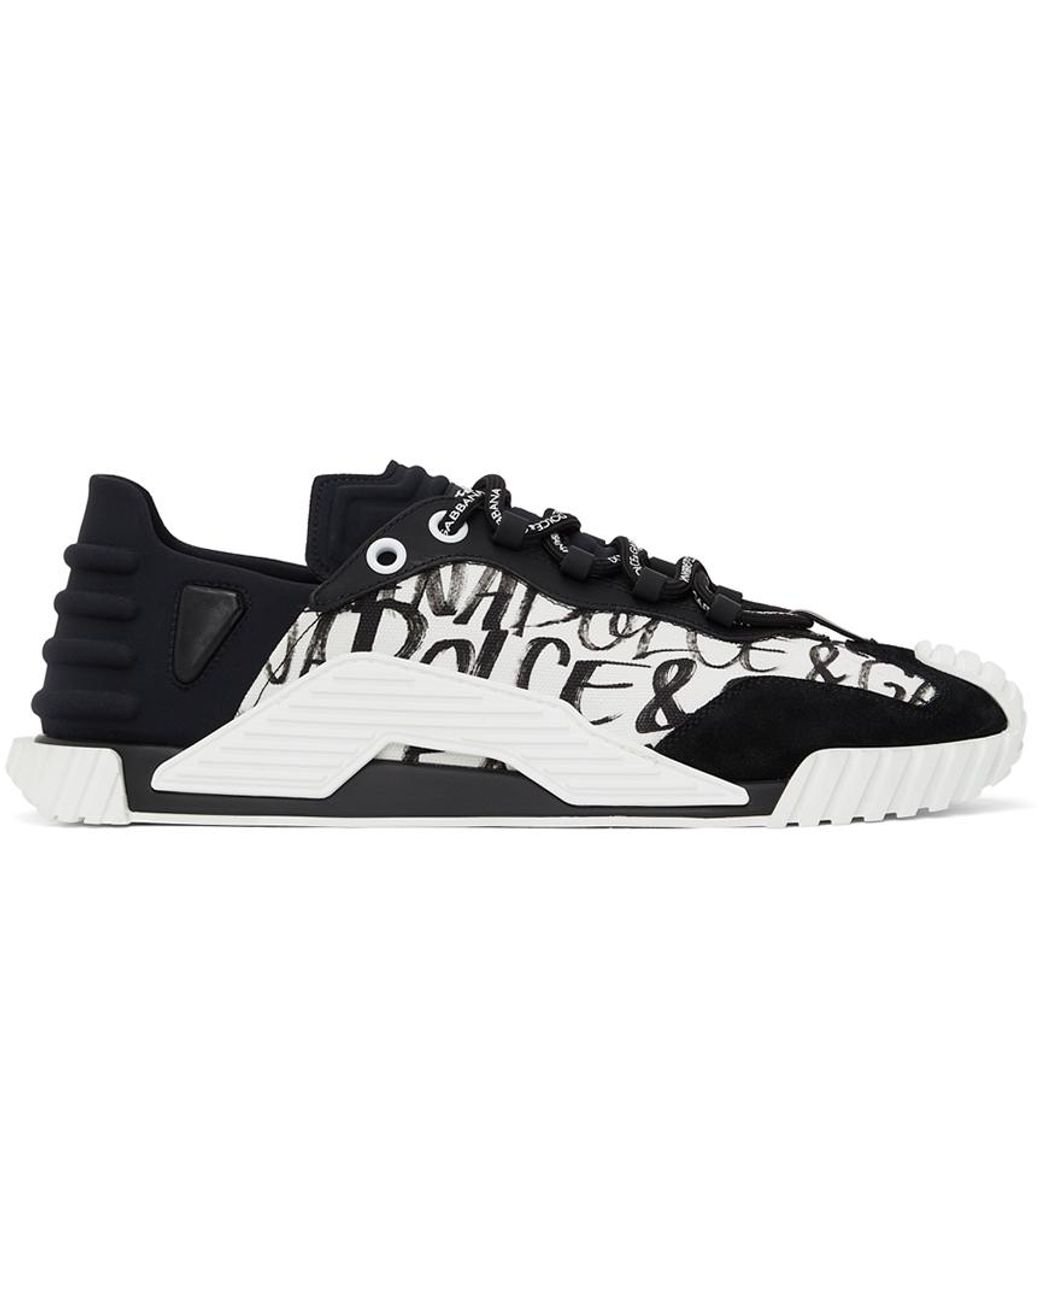 Dolce & Gabbana Canvas Black & White Ns1 Graffiti Sneakers for Men | Lyst